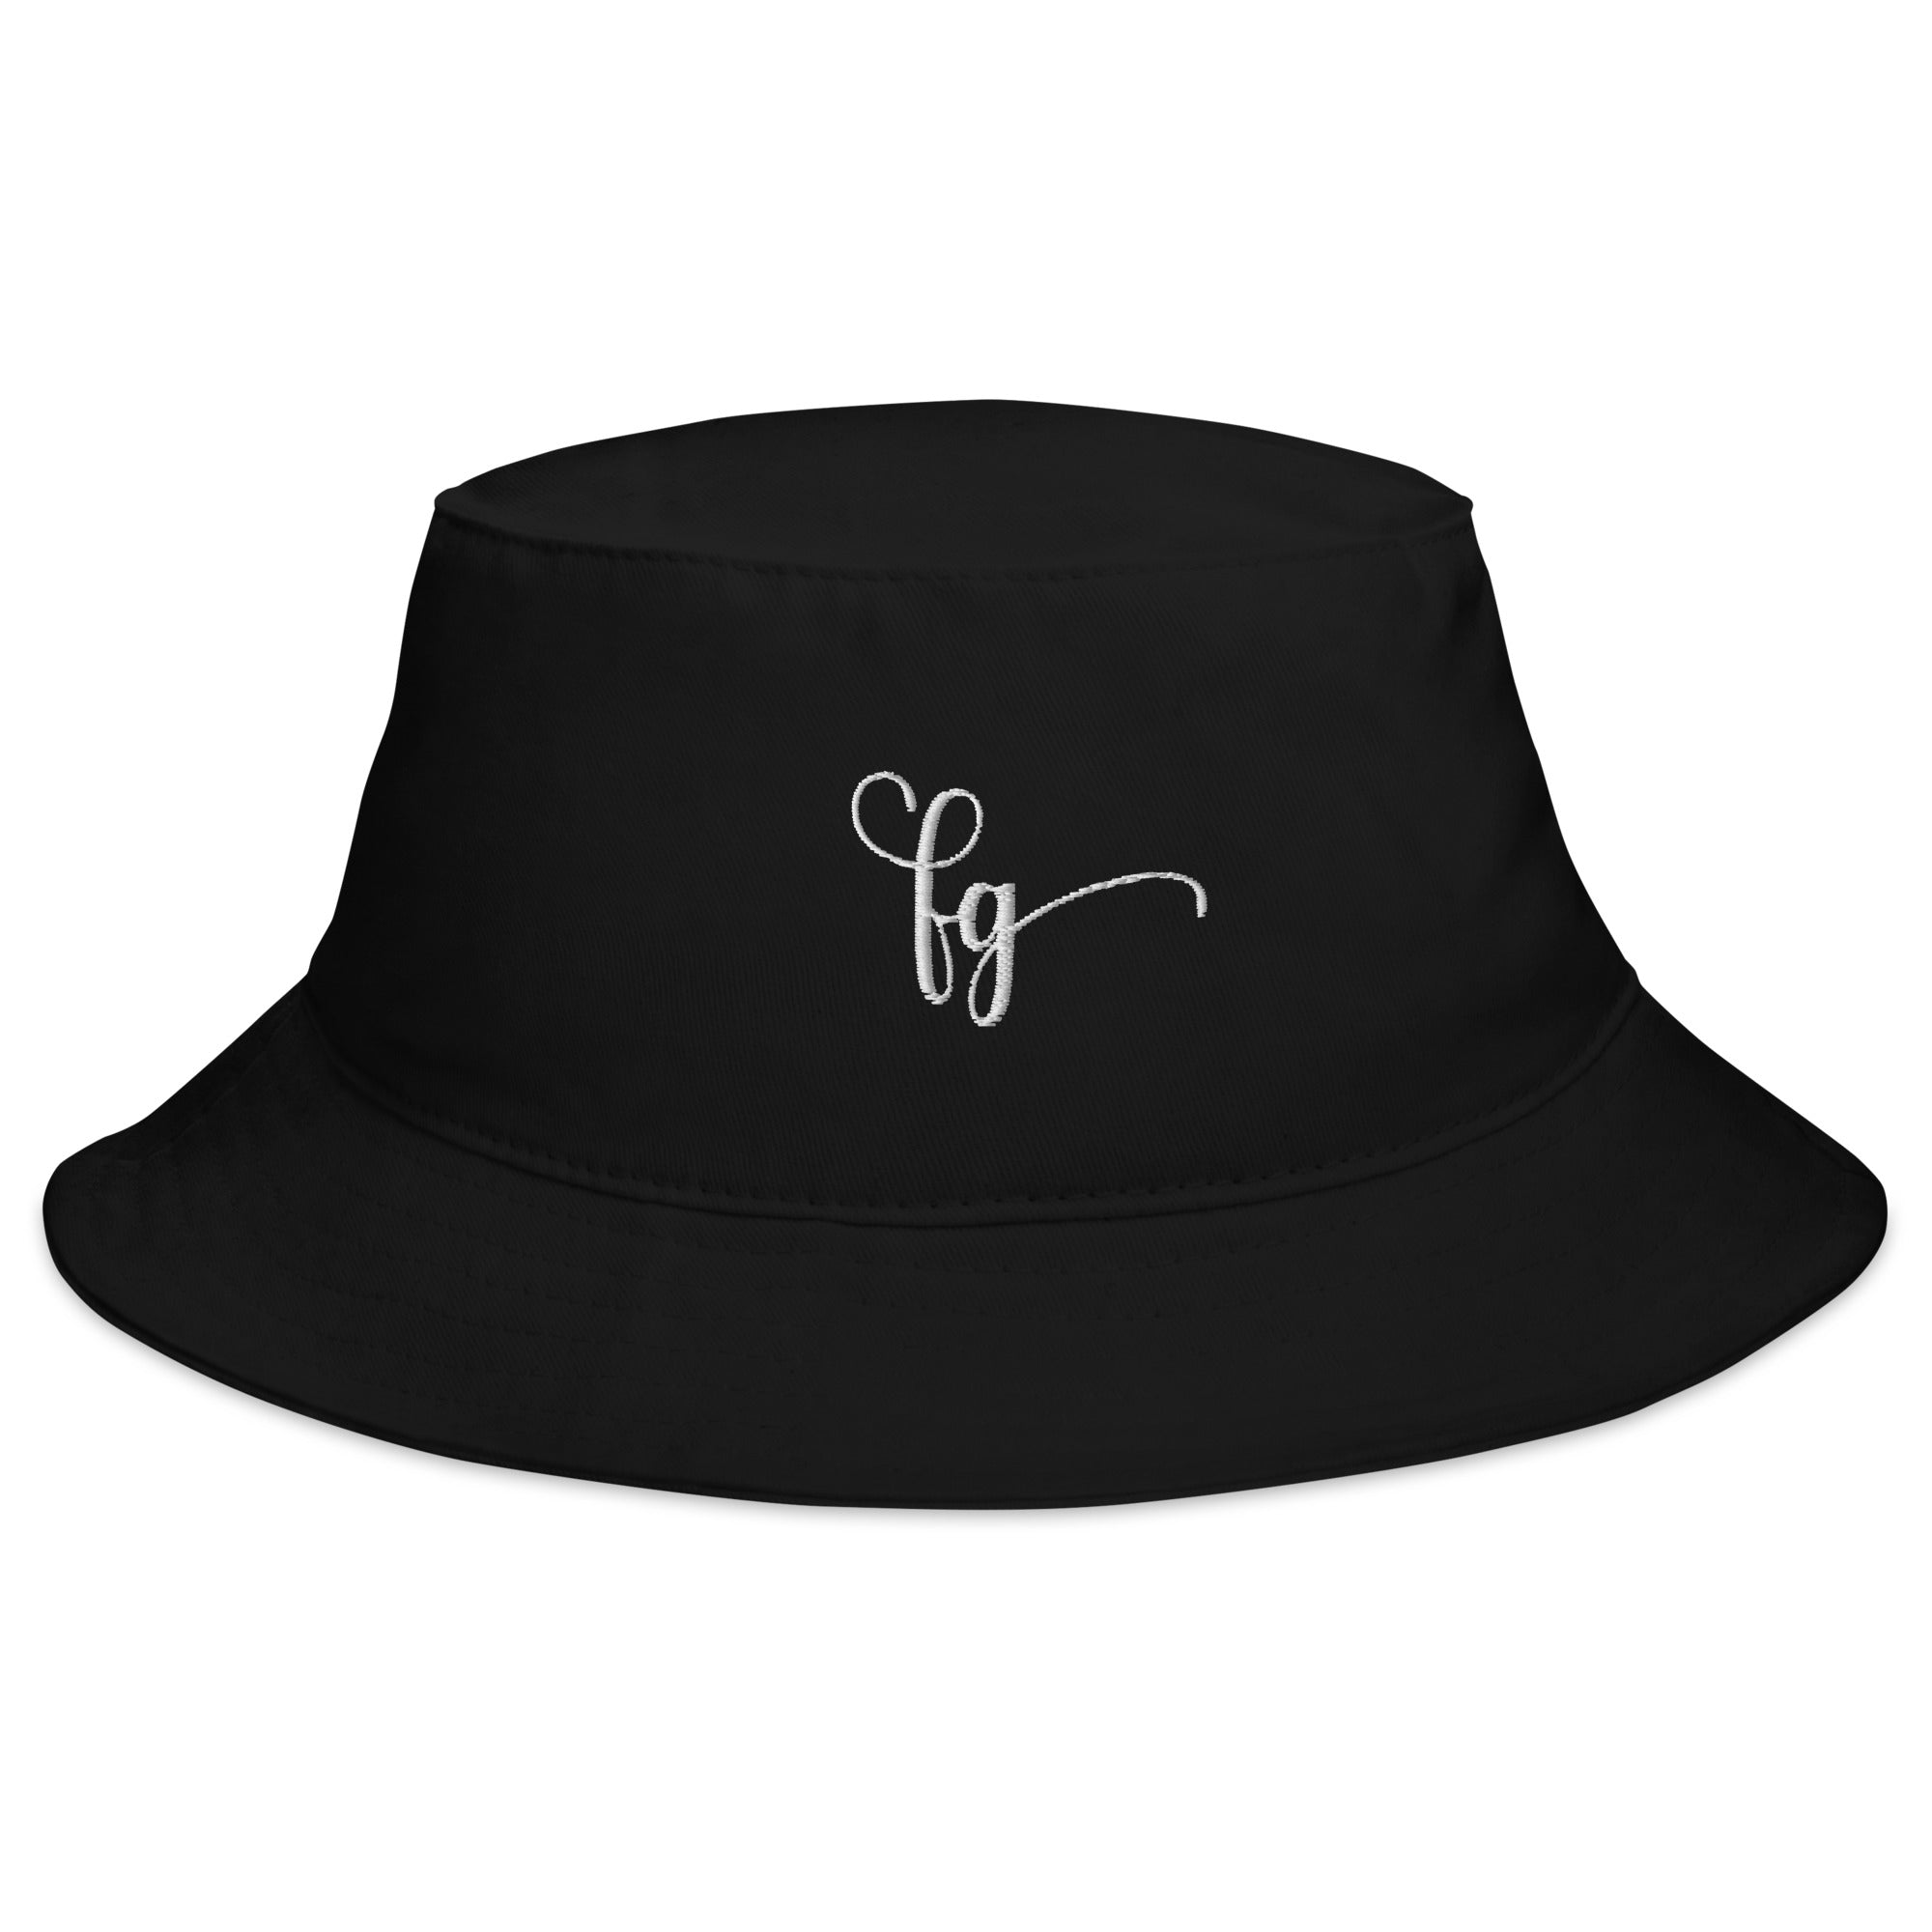 FG Bucket Hat - FleekGoddess